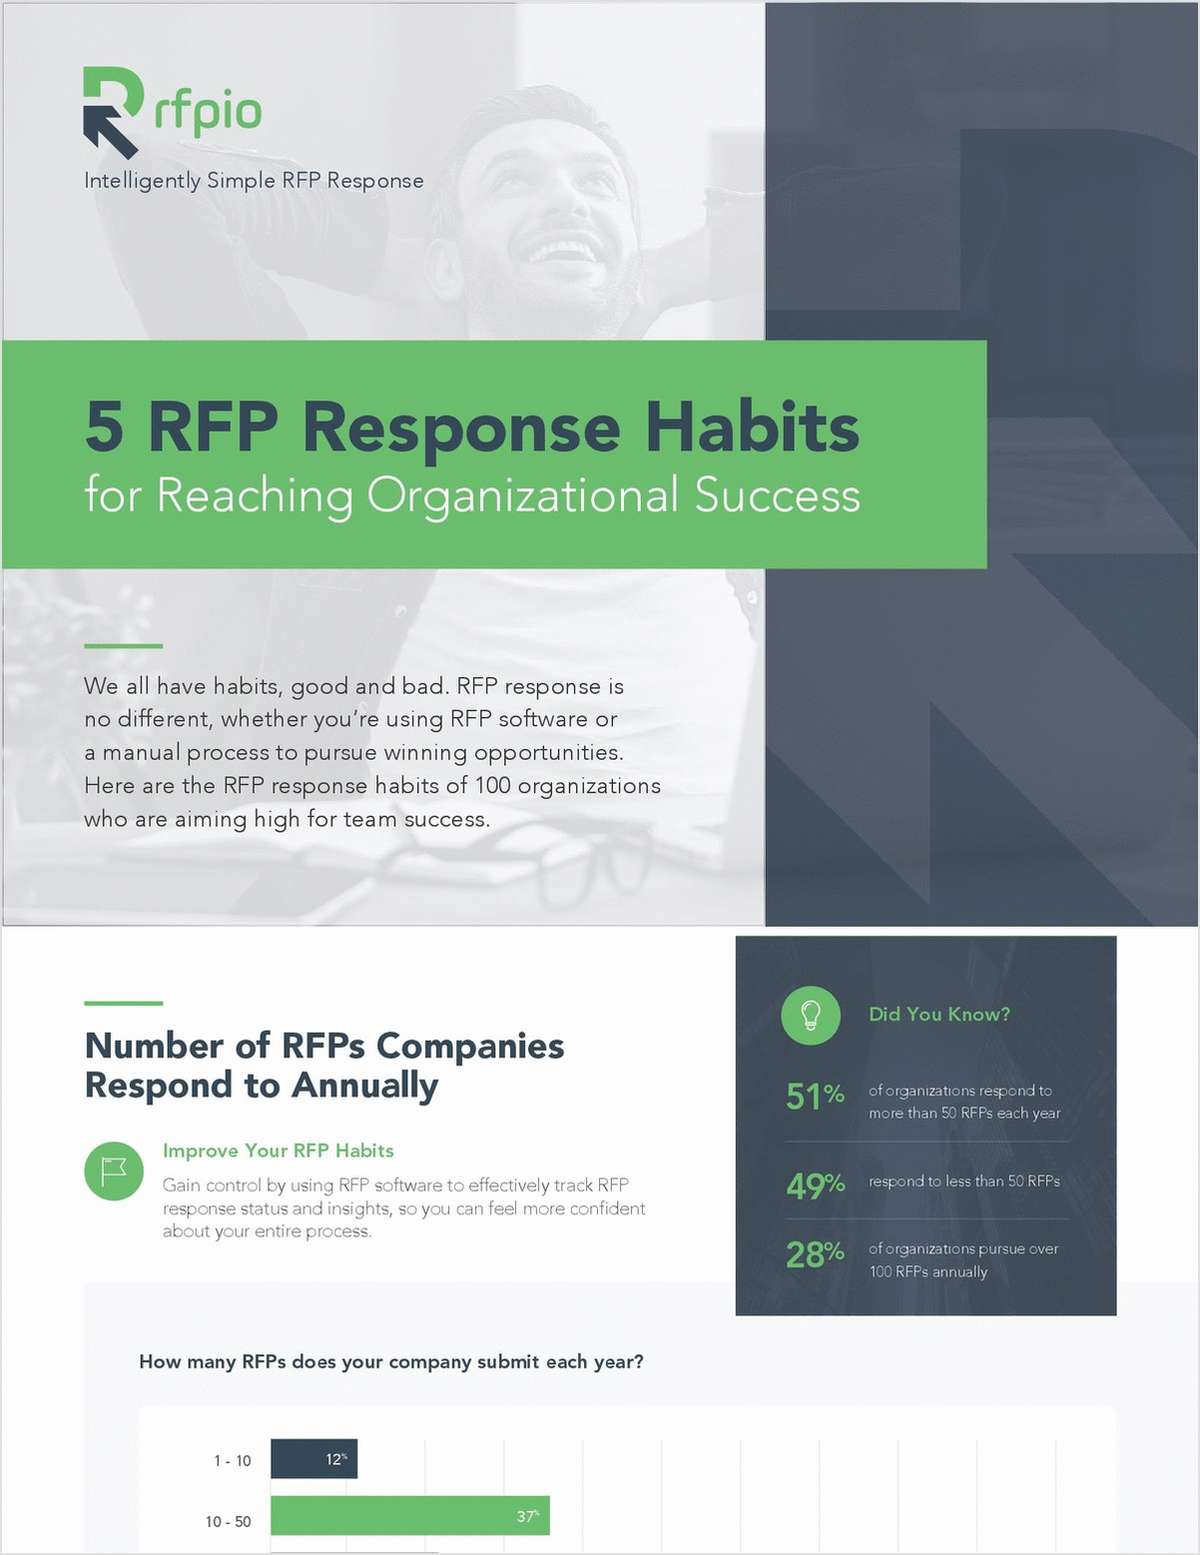 5 RFP Response Habits for Reaching Organizational Success